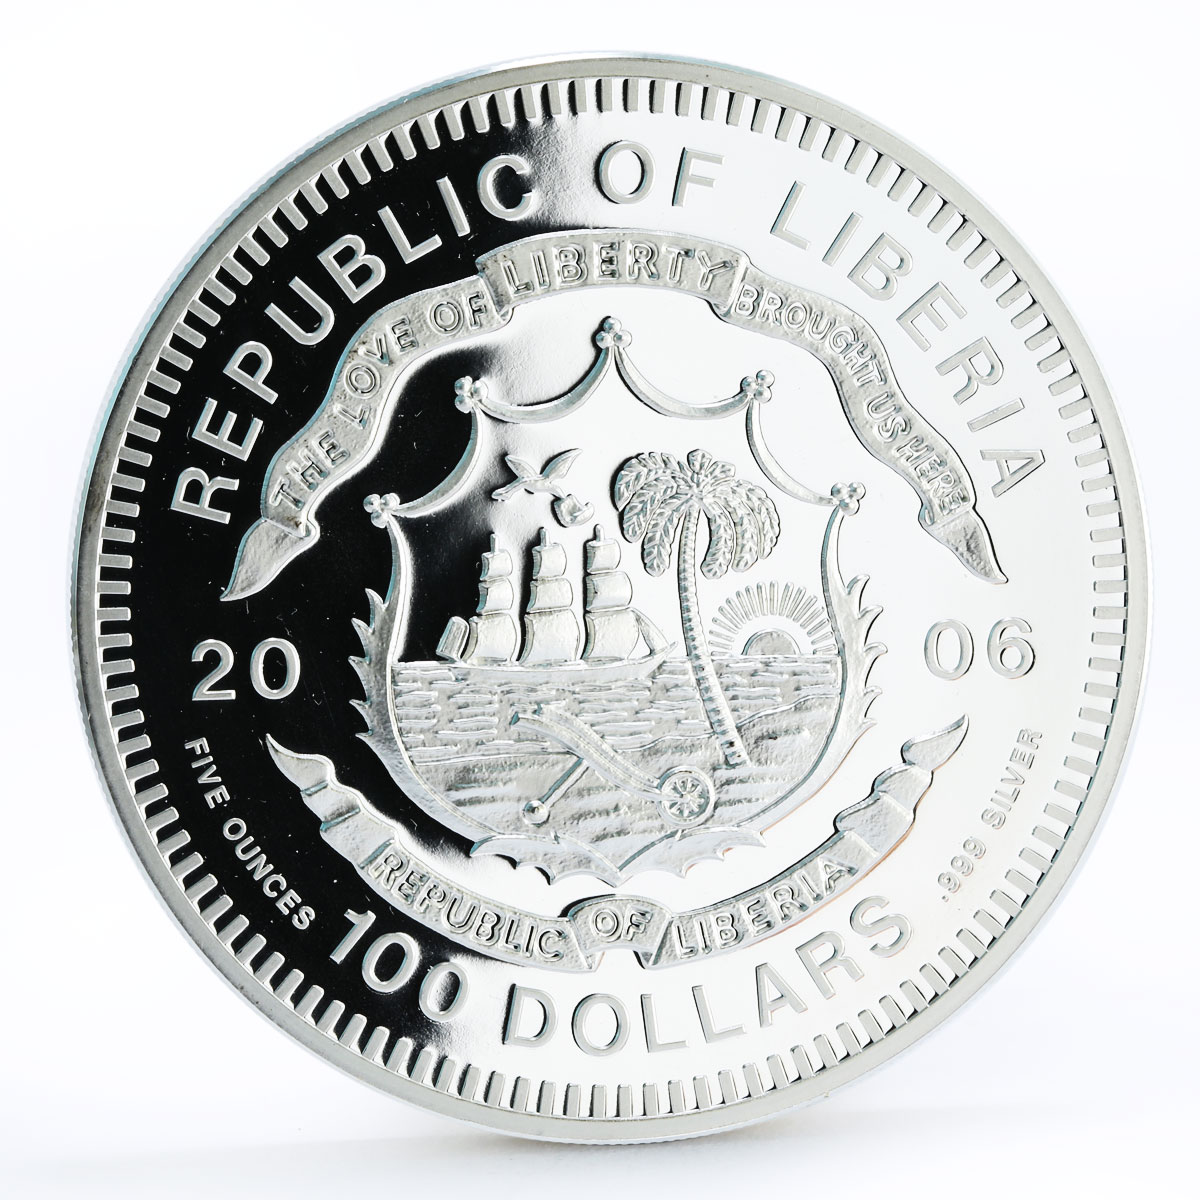 Liberia 100 dollars 80th Anniversary of Model Marilyn Monroe silver coin 2006